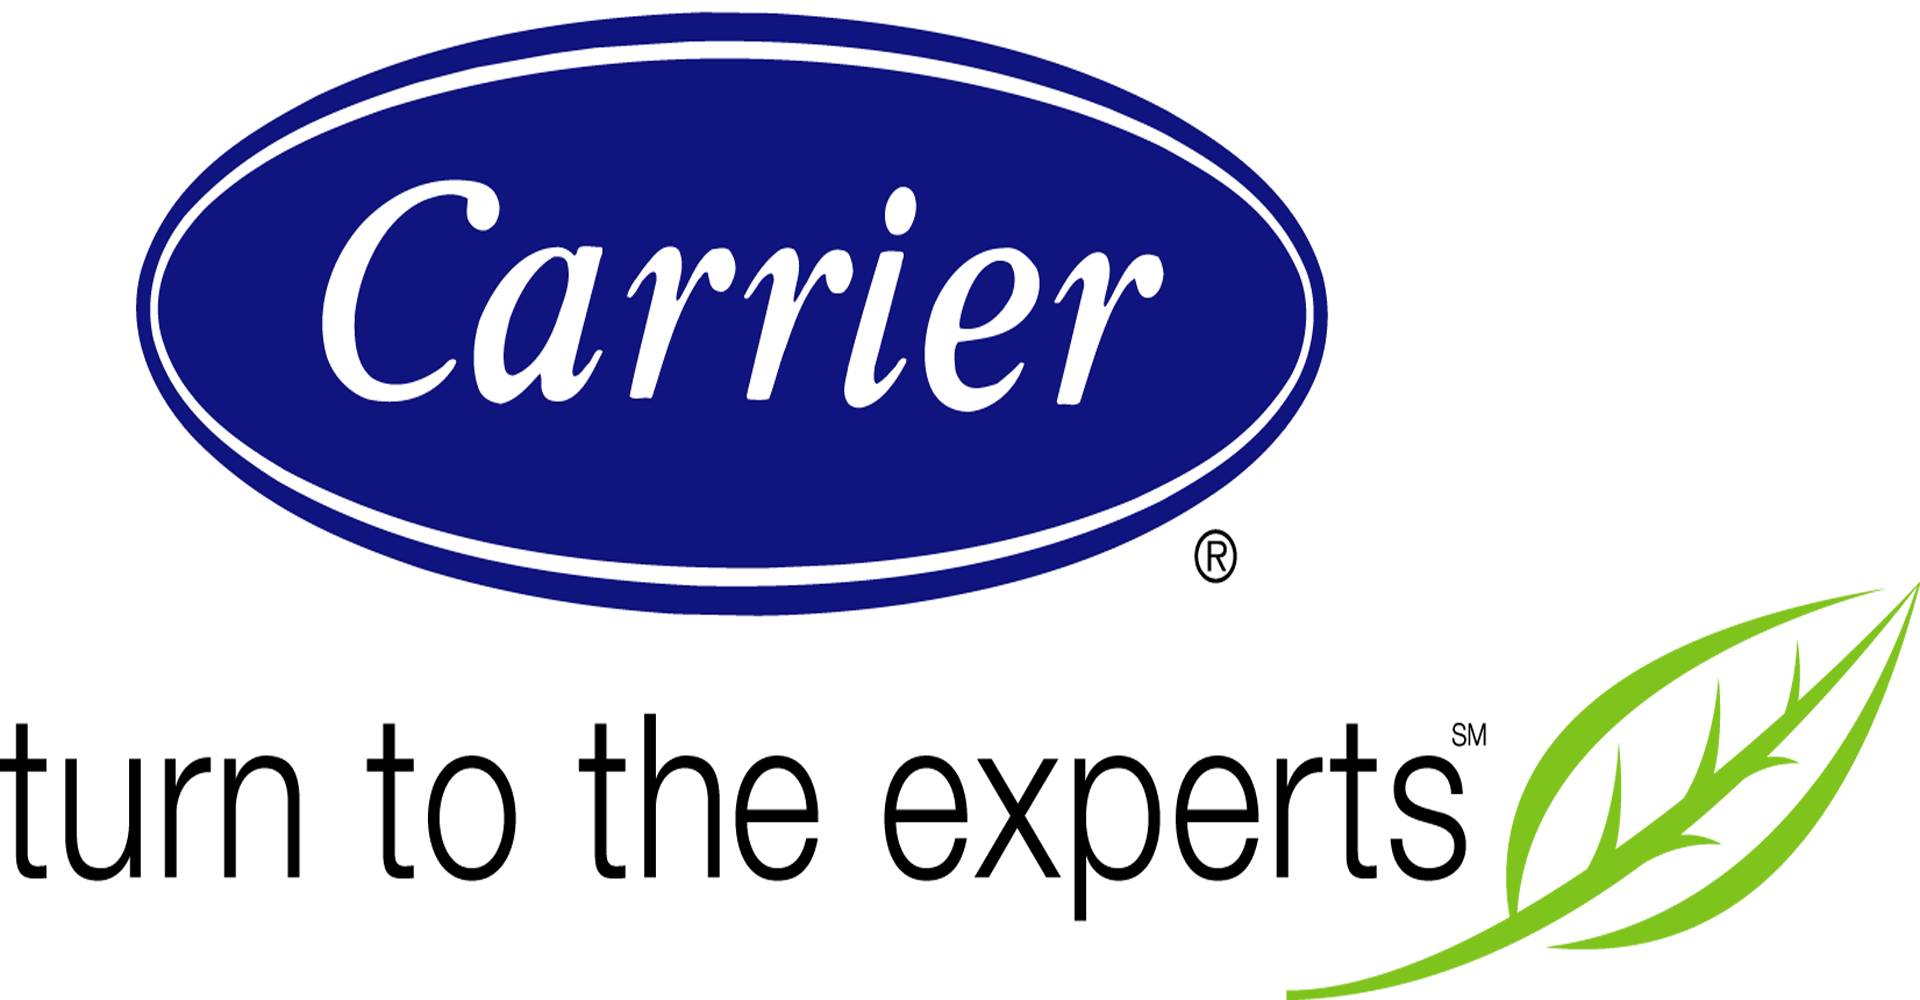 Carrier Logos
